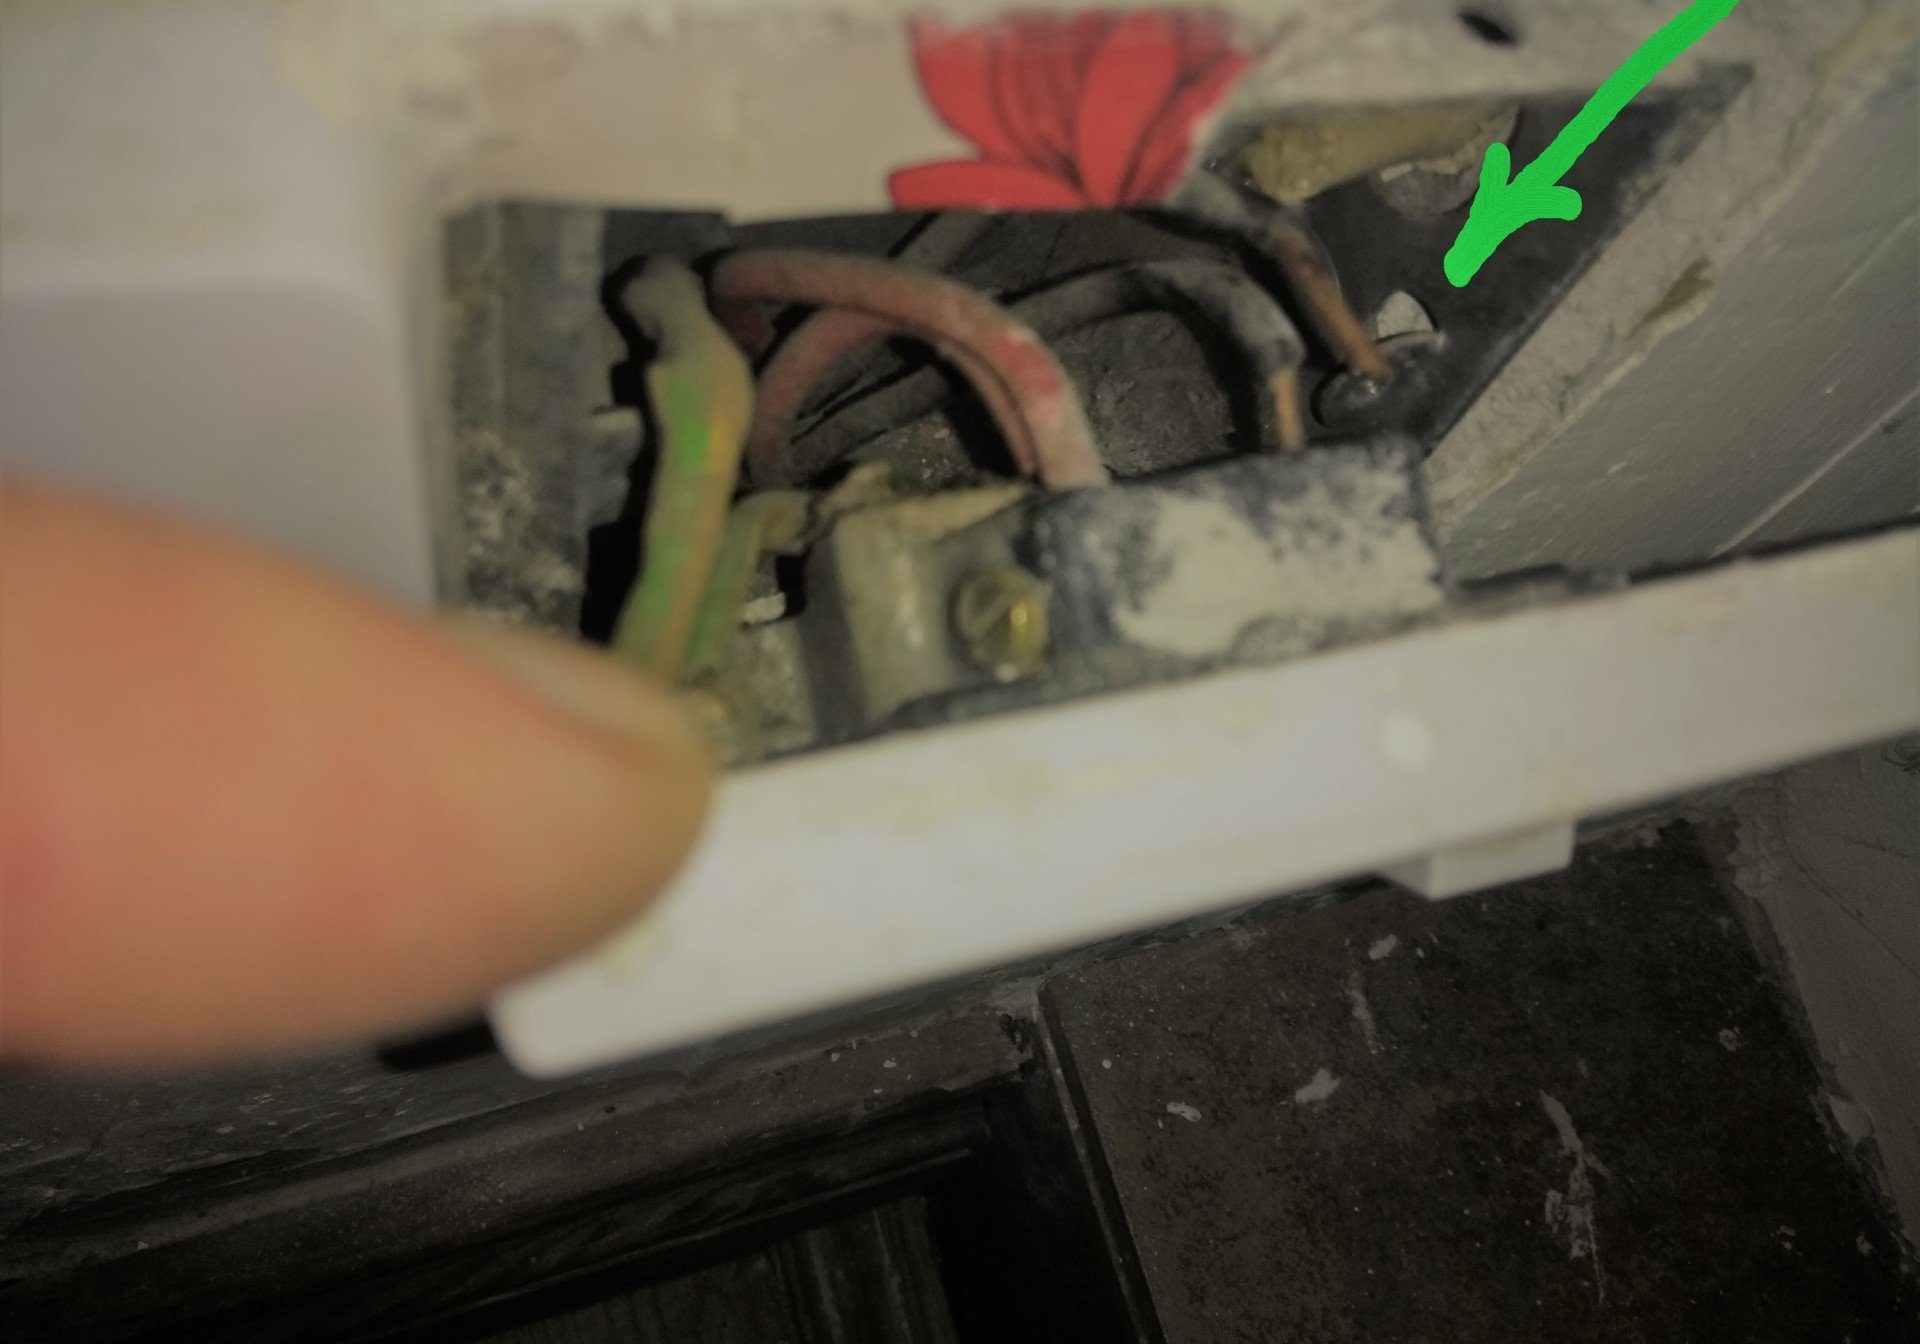 damaged plug socket